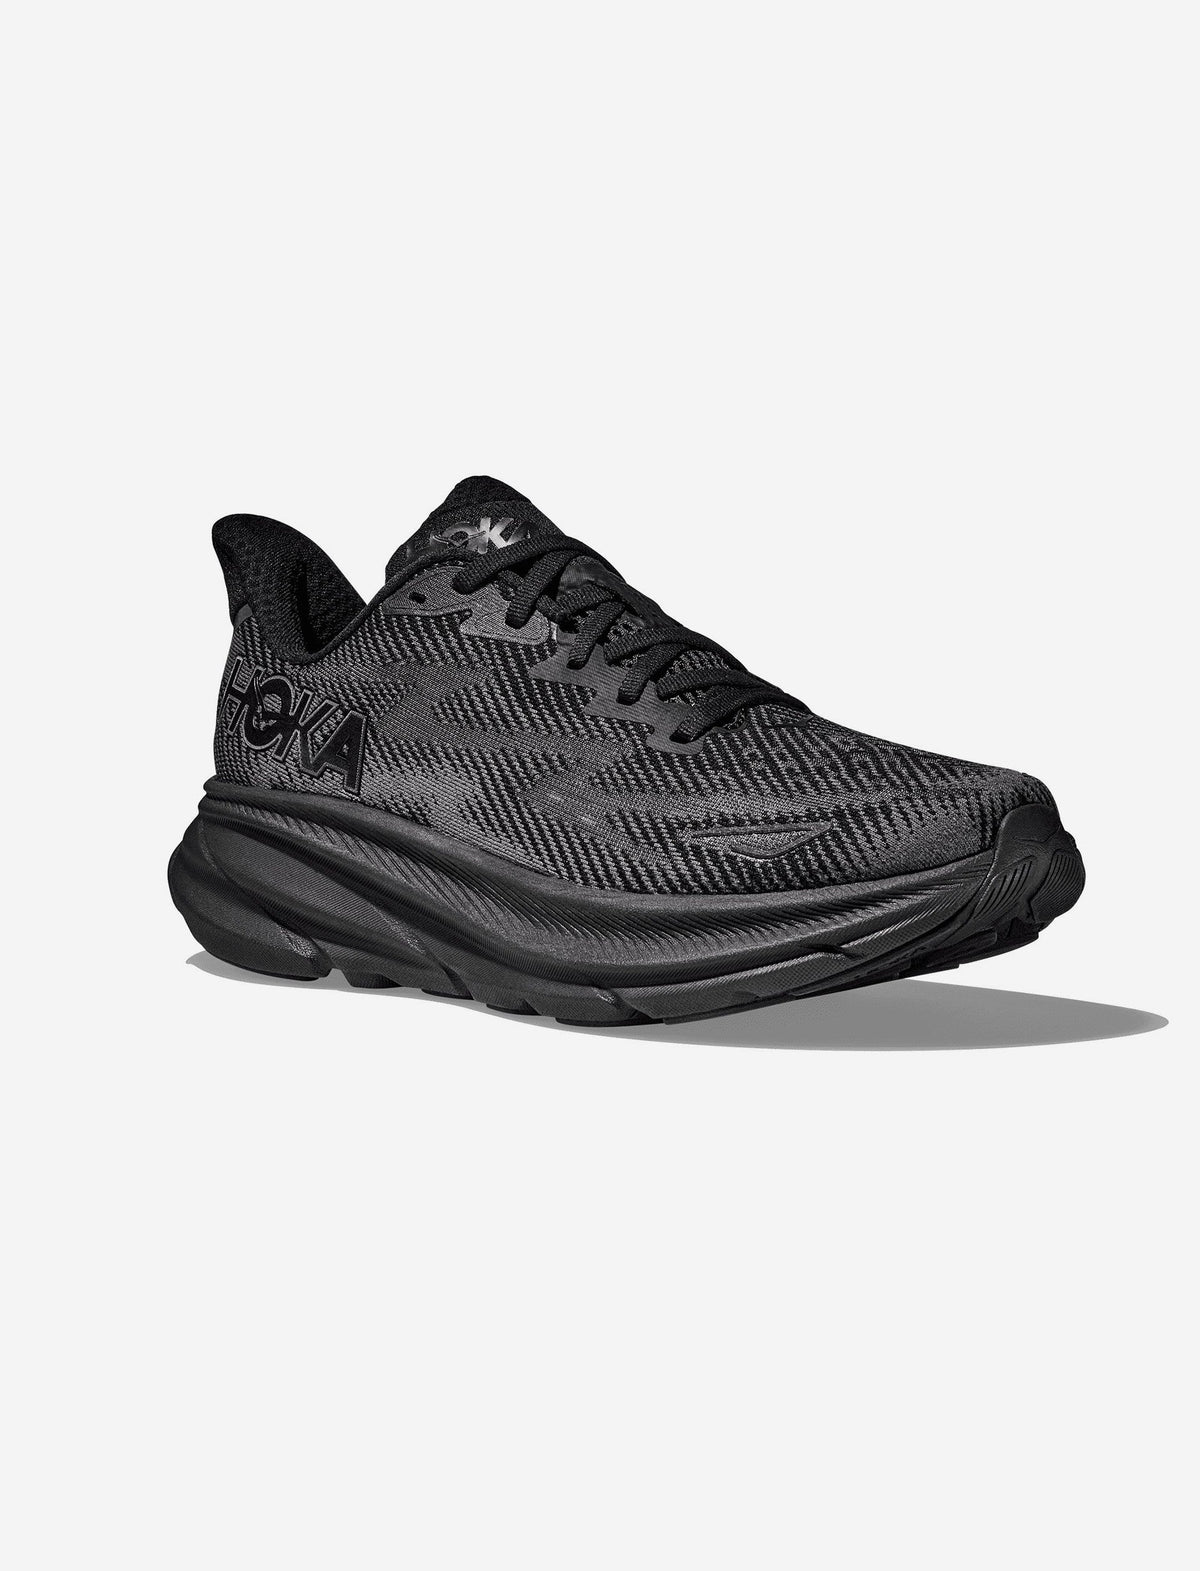 Hoka Clifton 9 - נעלי ספורט גברים הוקה קליפטון 9 בצבע שחור/שחור-Hoka-44-נאקו